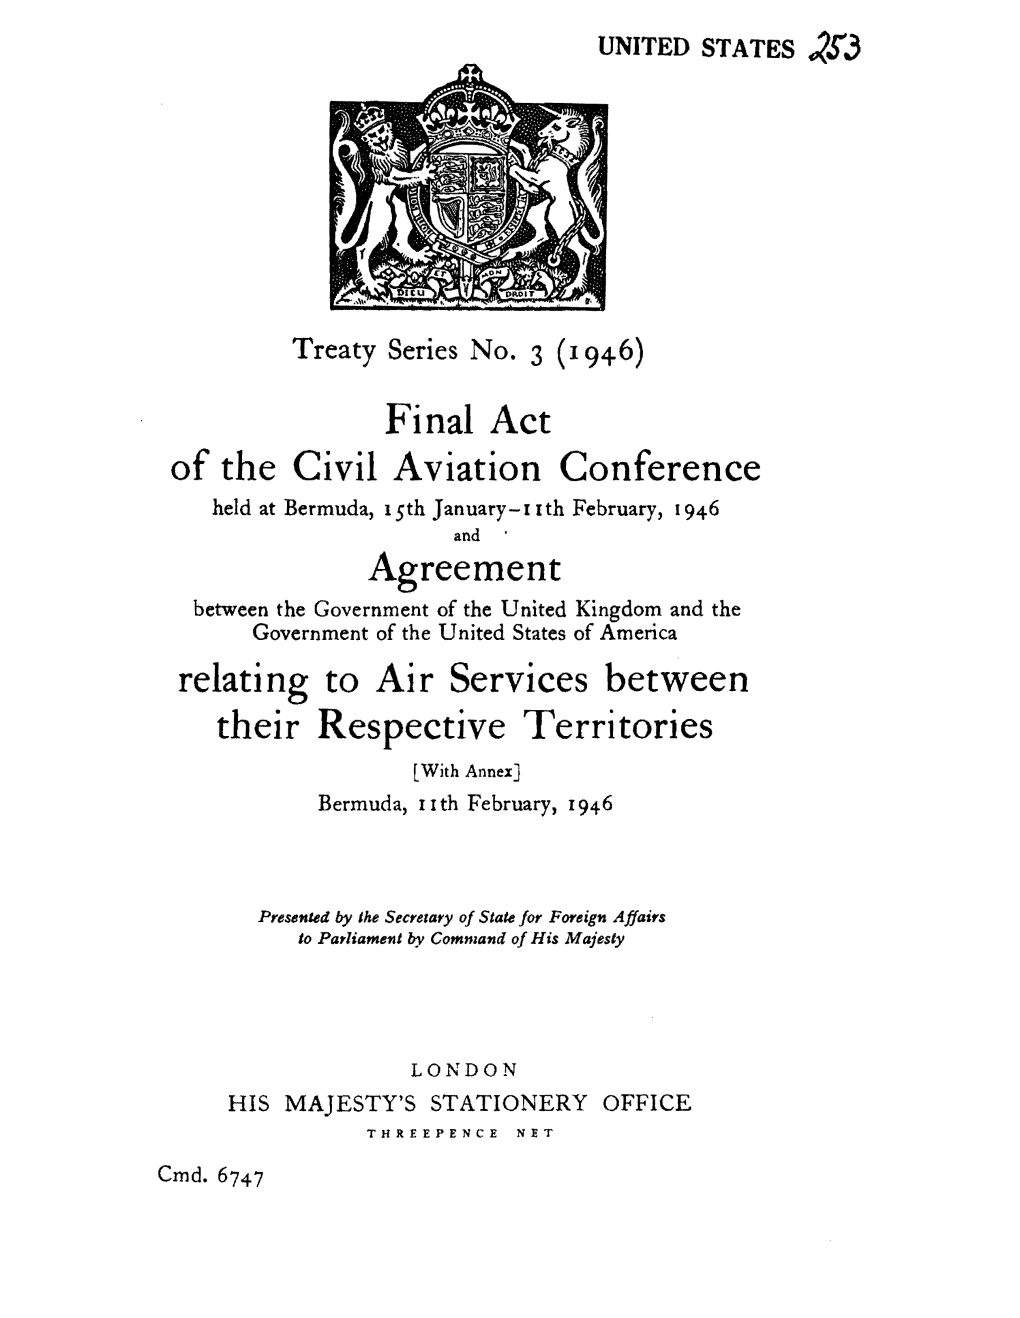 U.S.-Bermuda Air Transport Agreement of Feb. 11, 1946